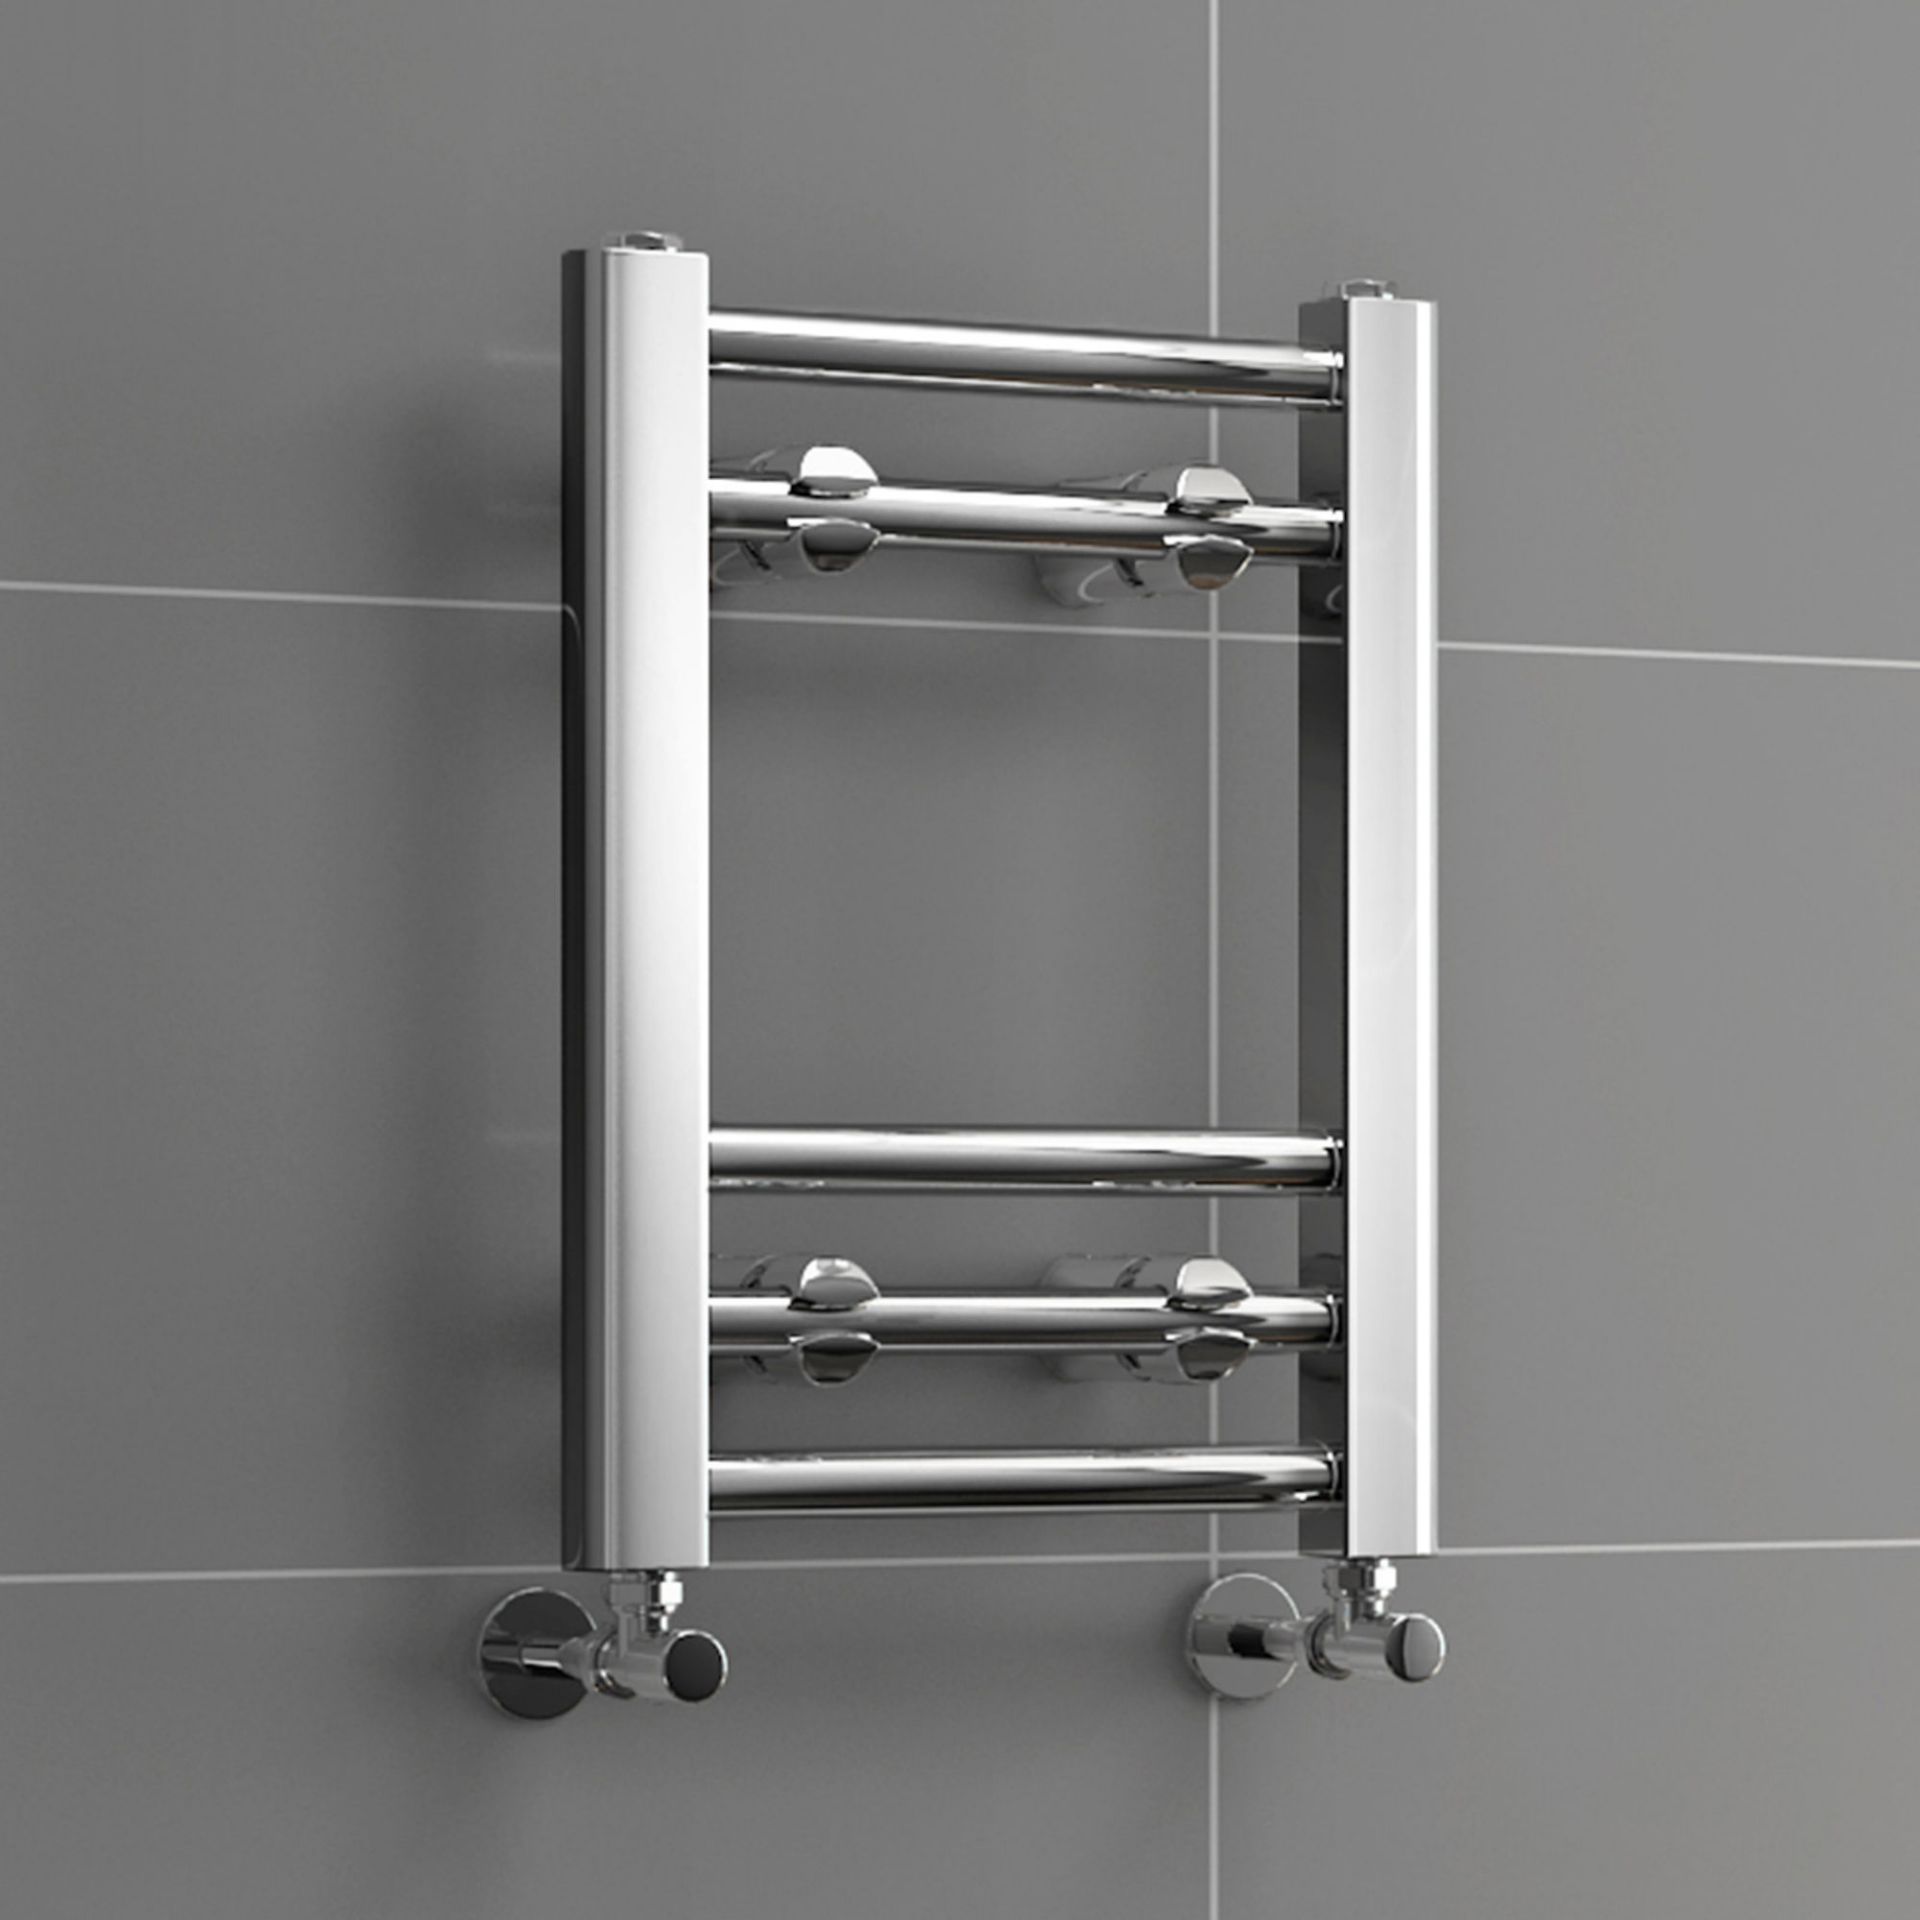 (MW12) 400x300mm - 20mm Tubes - Chrome Heated Straight Rail Ladder Towel Rail. Low carbon steel